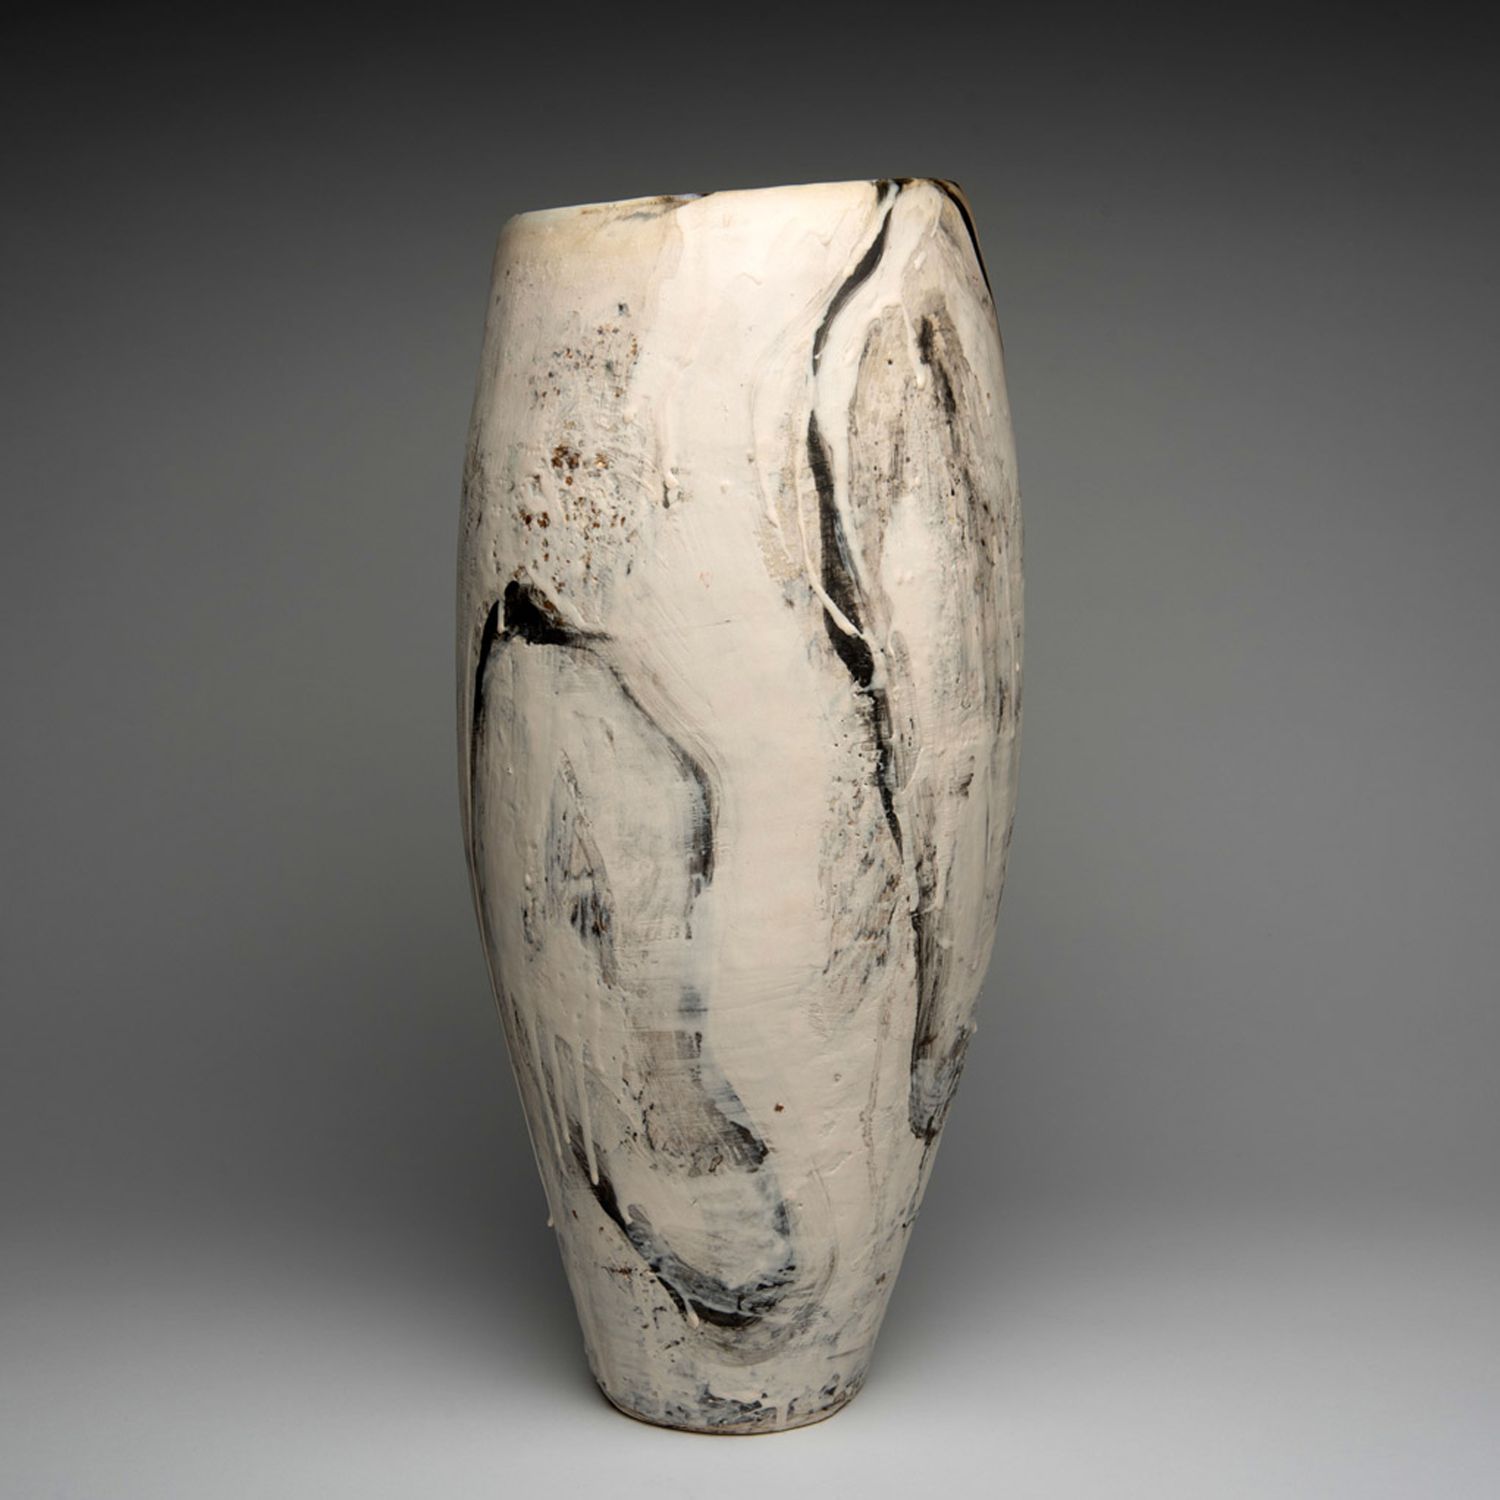 Lindsay Gravelle: Slip Vase Product Image 1 of 2